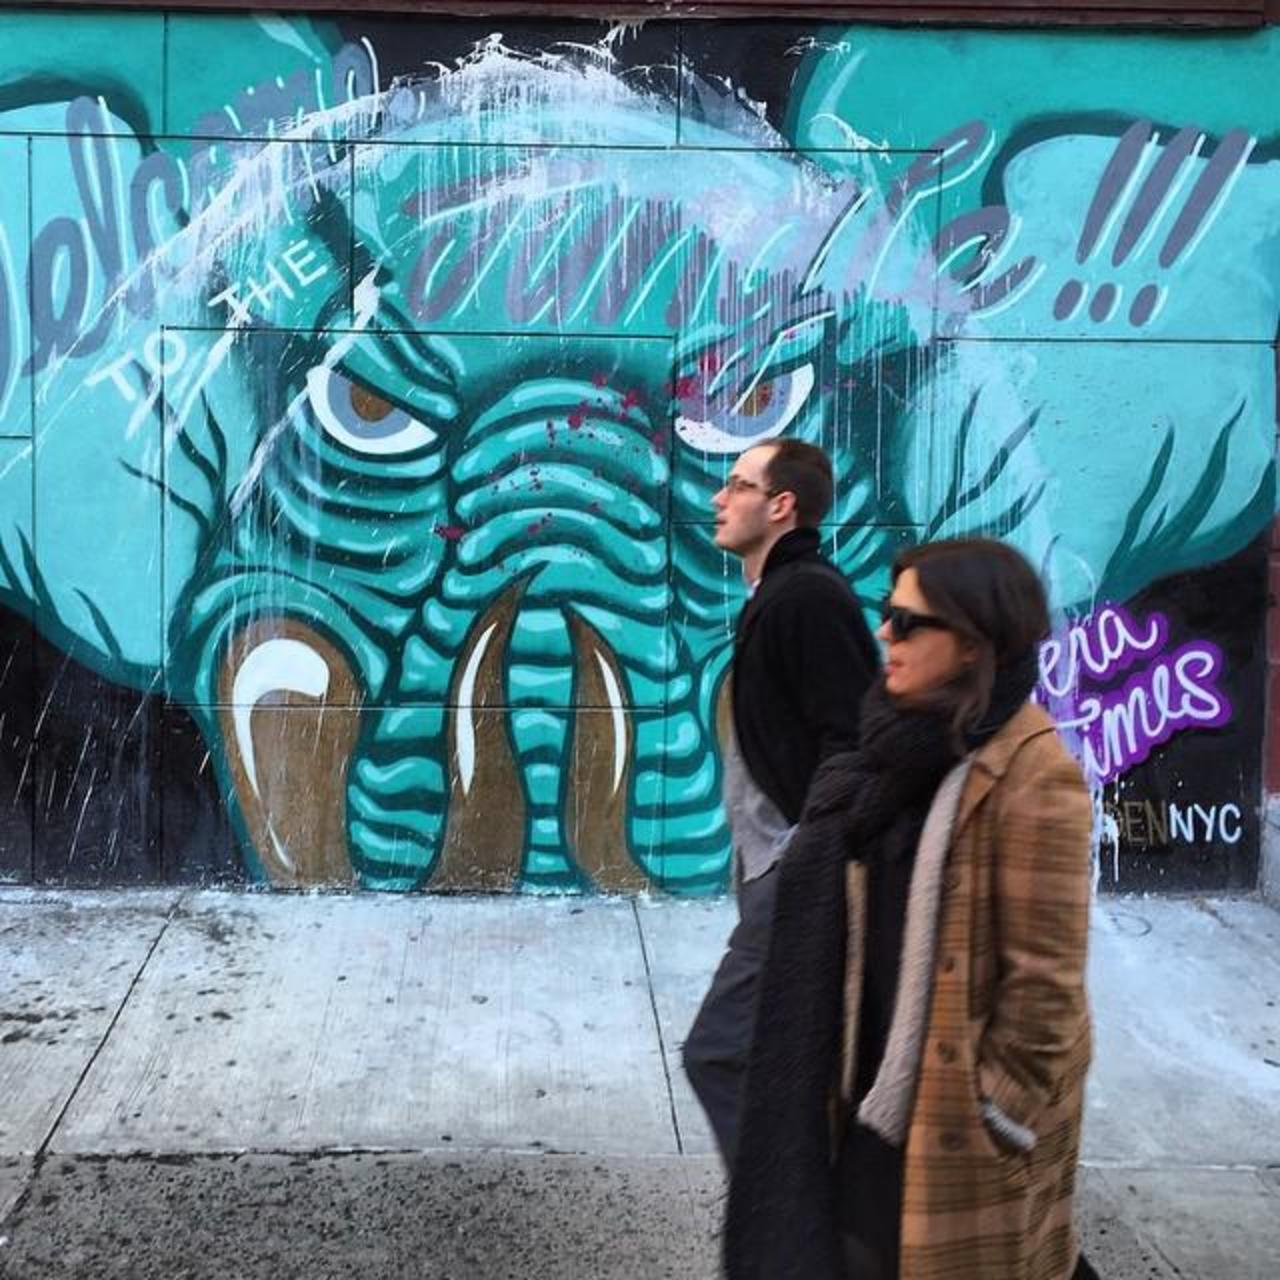 Mural Graffiti Art
Kenmare Street NYC 
@veratimes #staygoldennyc #mural #graff #graffiti #graffitinyc #outsider #ou… http://t.co/CKUQjTM5JK